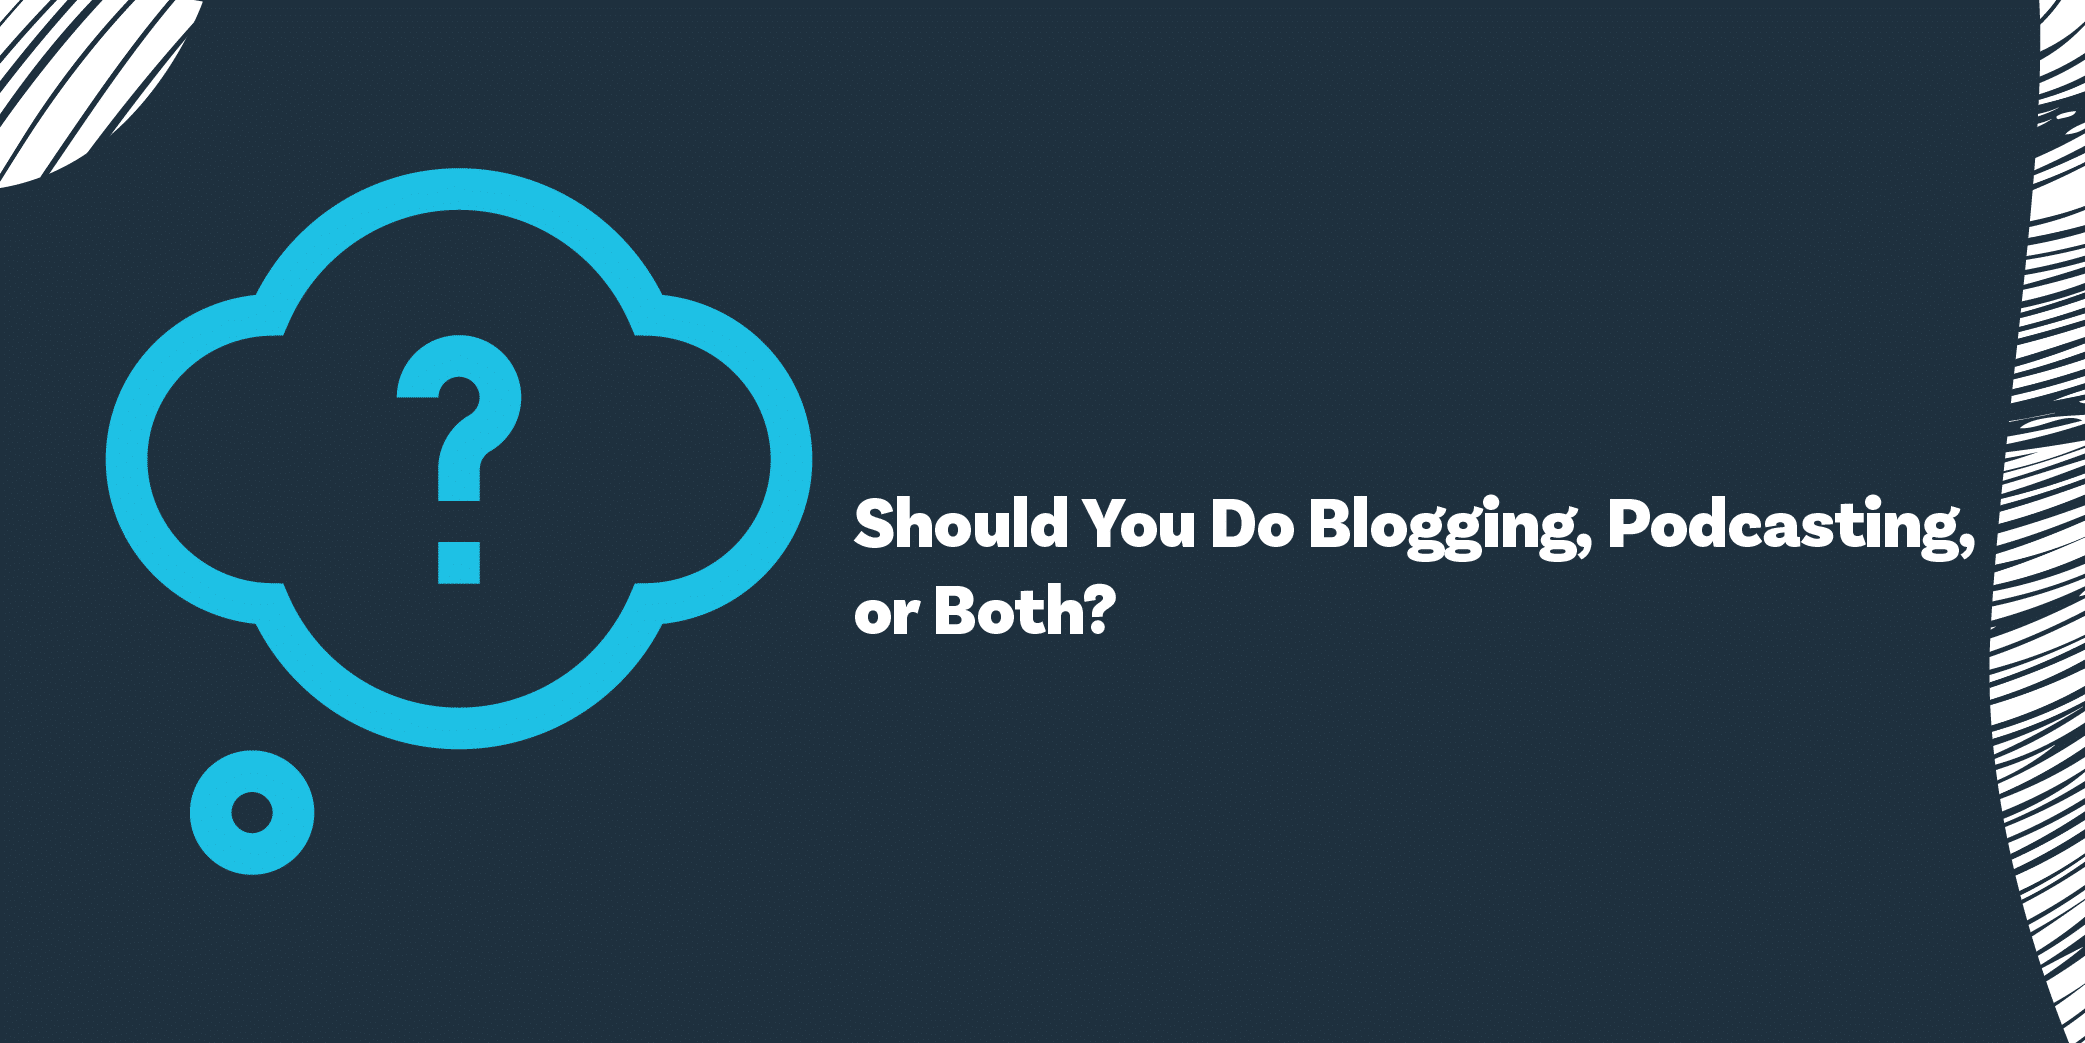 Should You Do Blogging Or Podcasting?